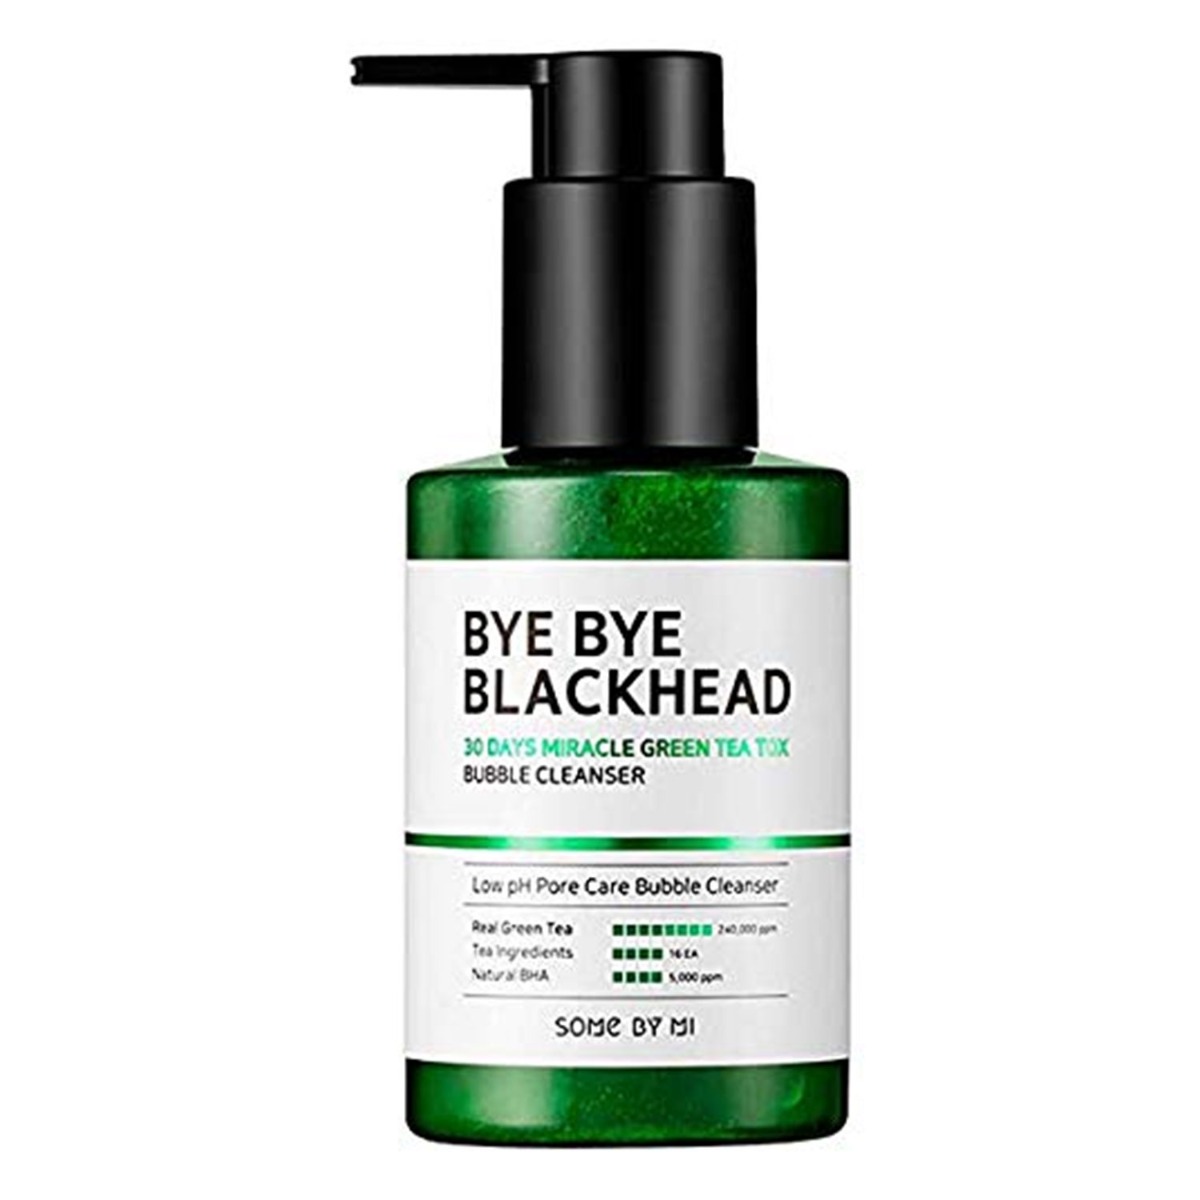 SOMEBYMI Bye Bye Blackhead 30 Days Miracle Green Tea Tox Bubble Cleanser, 120gm